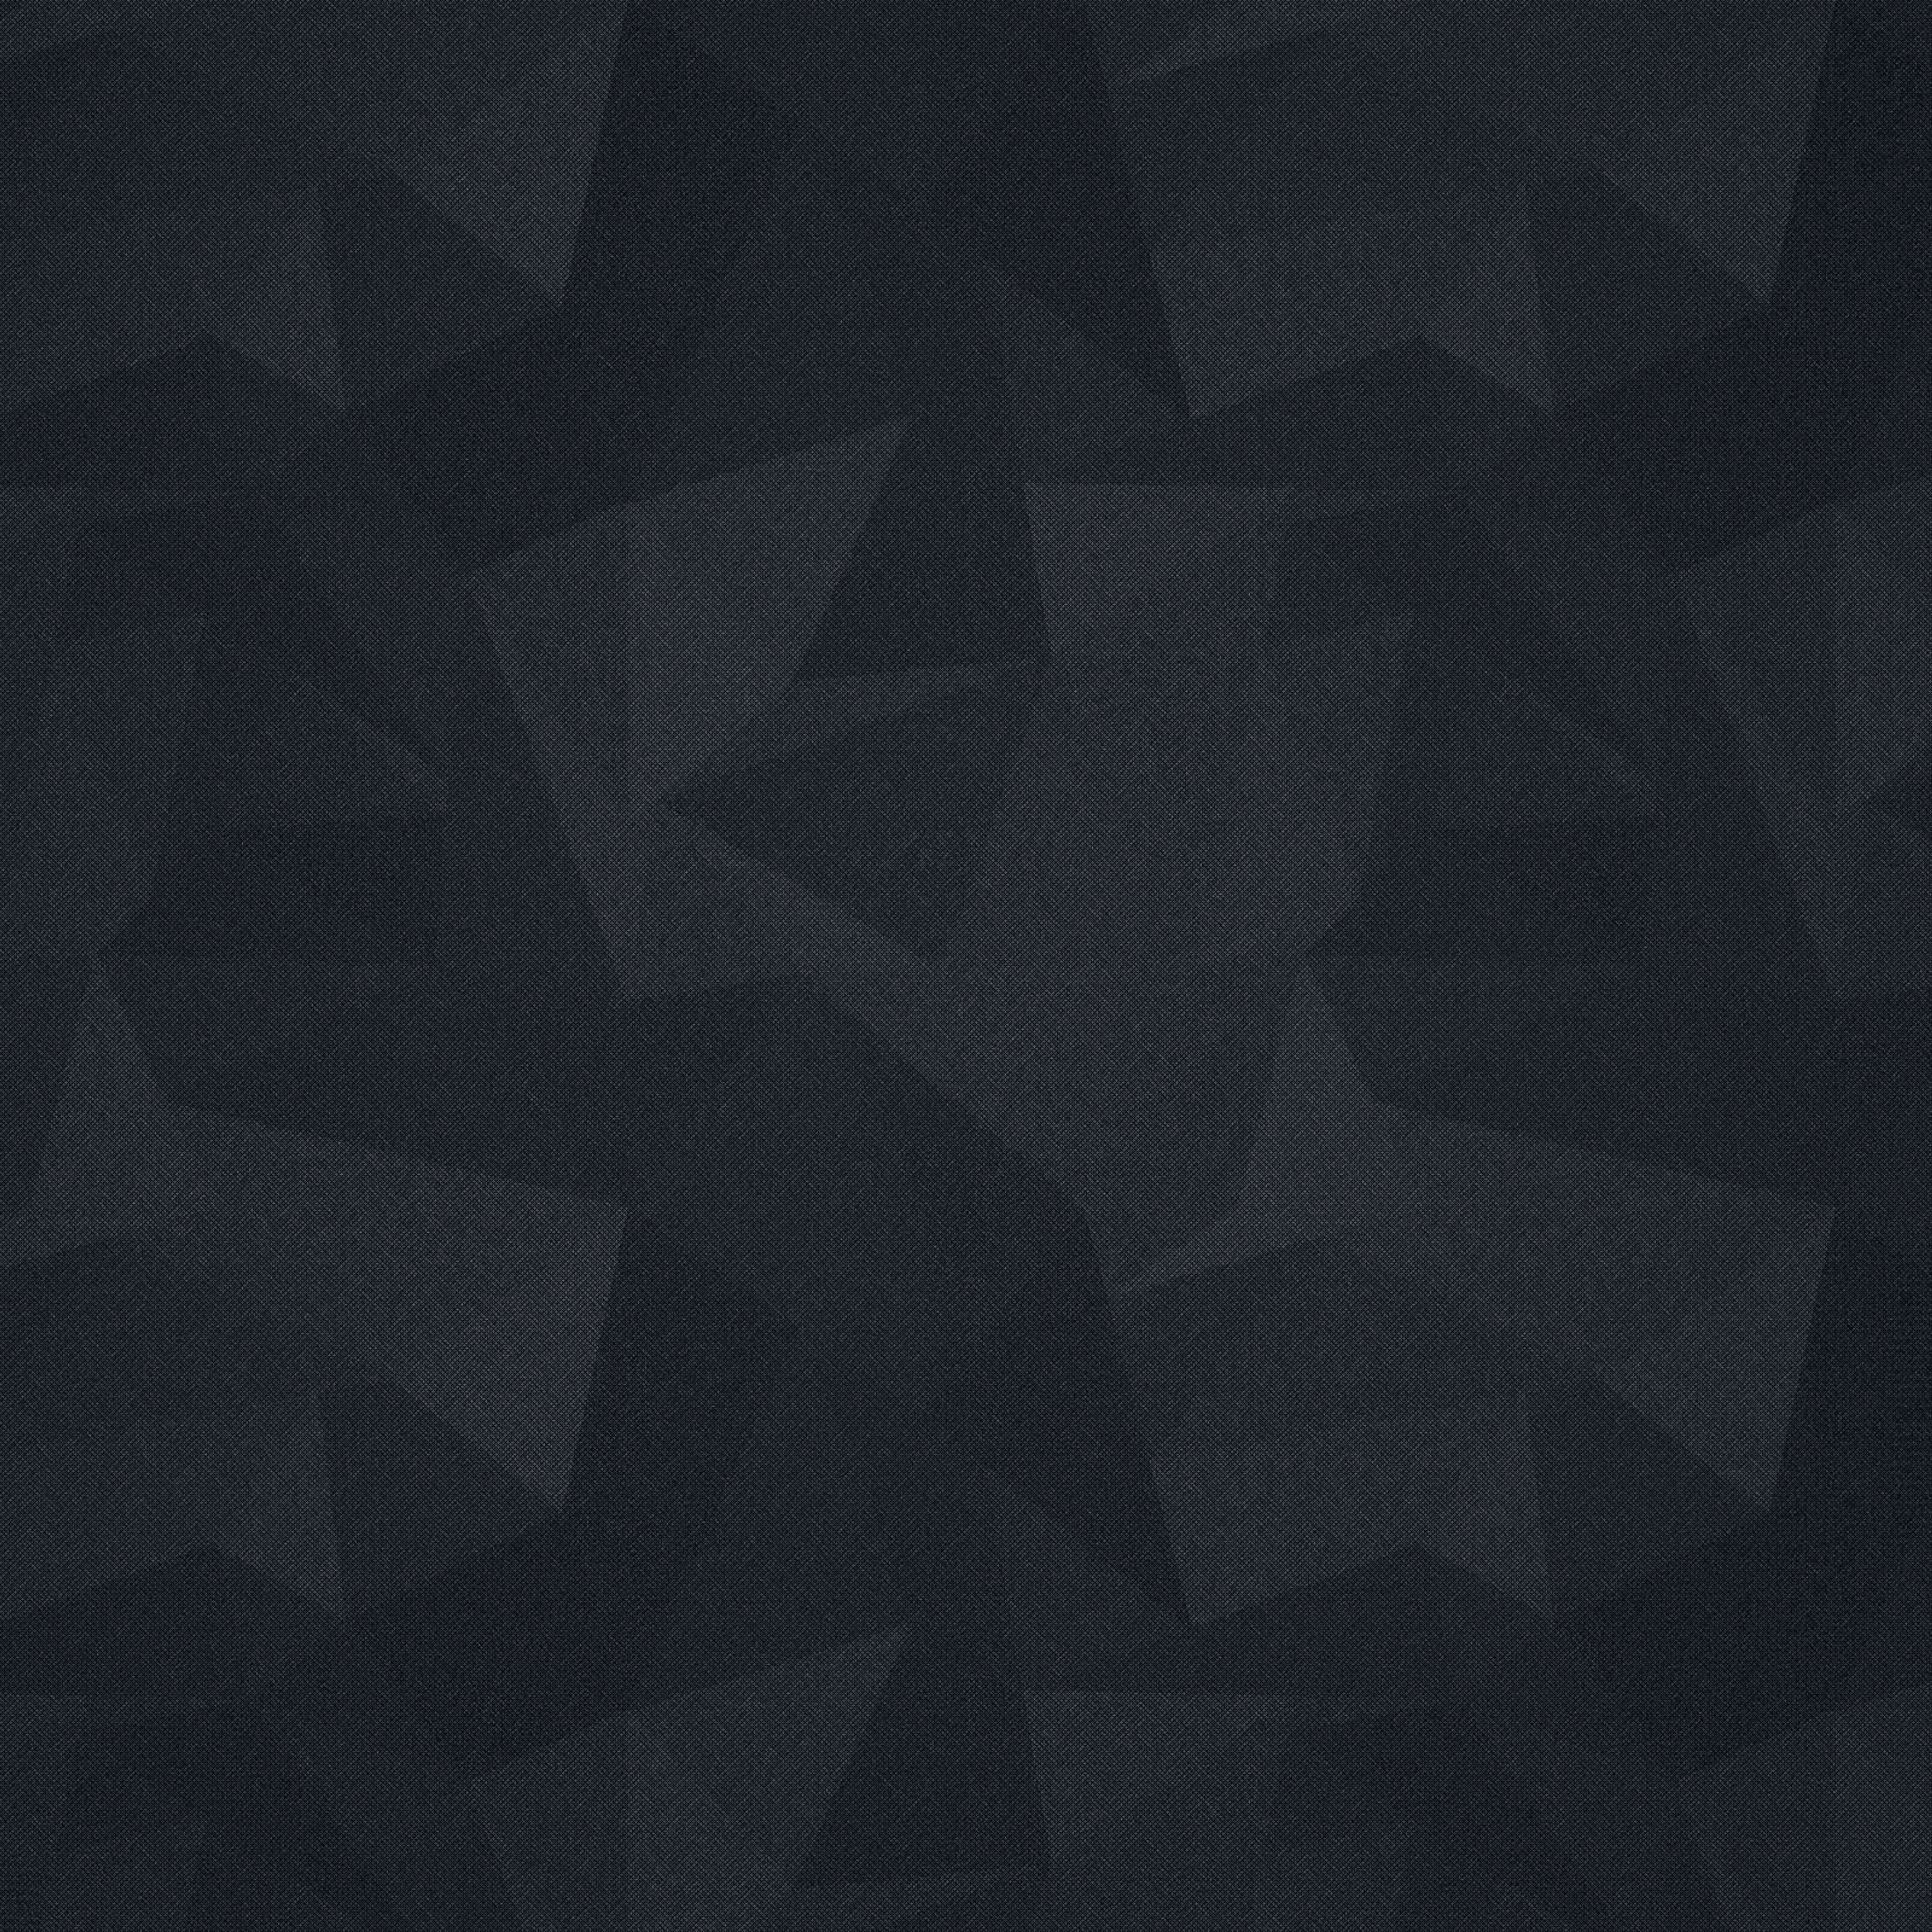 Black Triangle Vector Folds, Full HD 2K Wallpaper